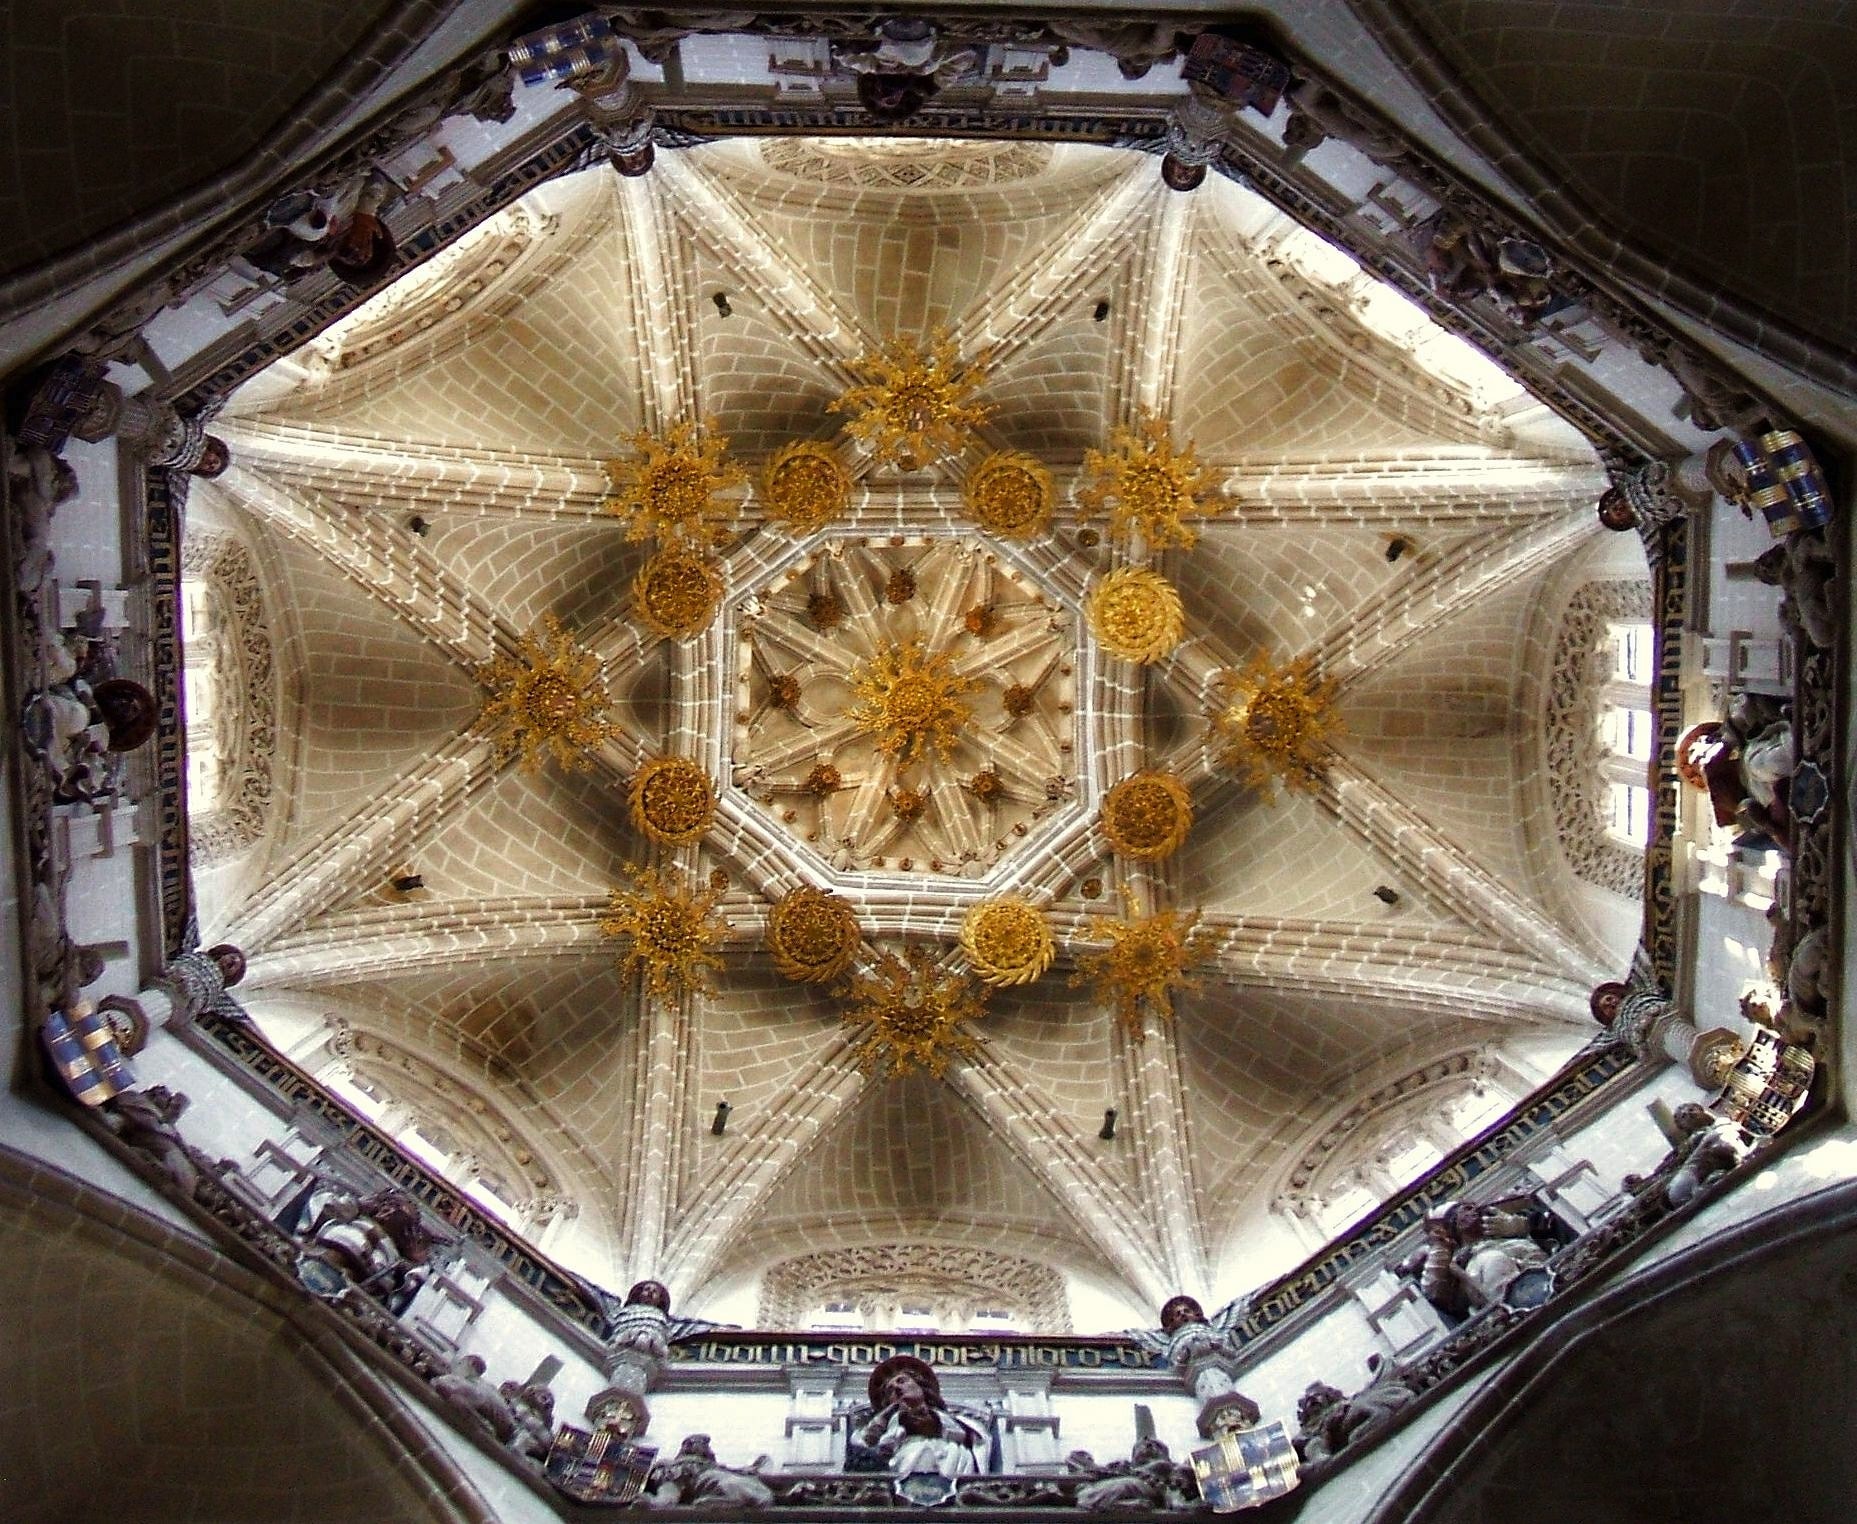 Inside, Ceiling, Church, Interior, ornate, indoors